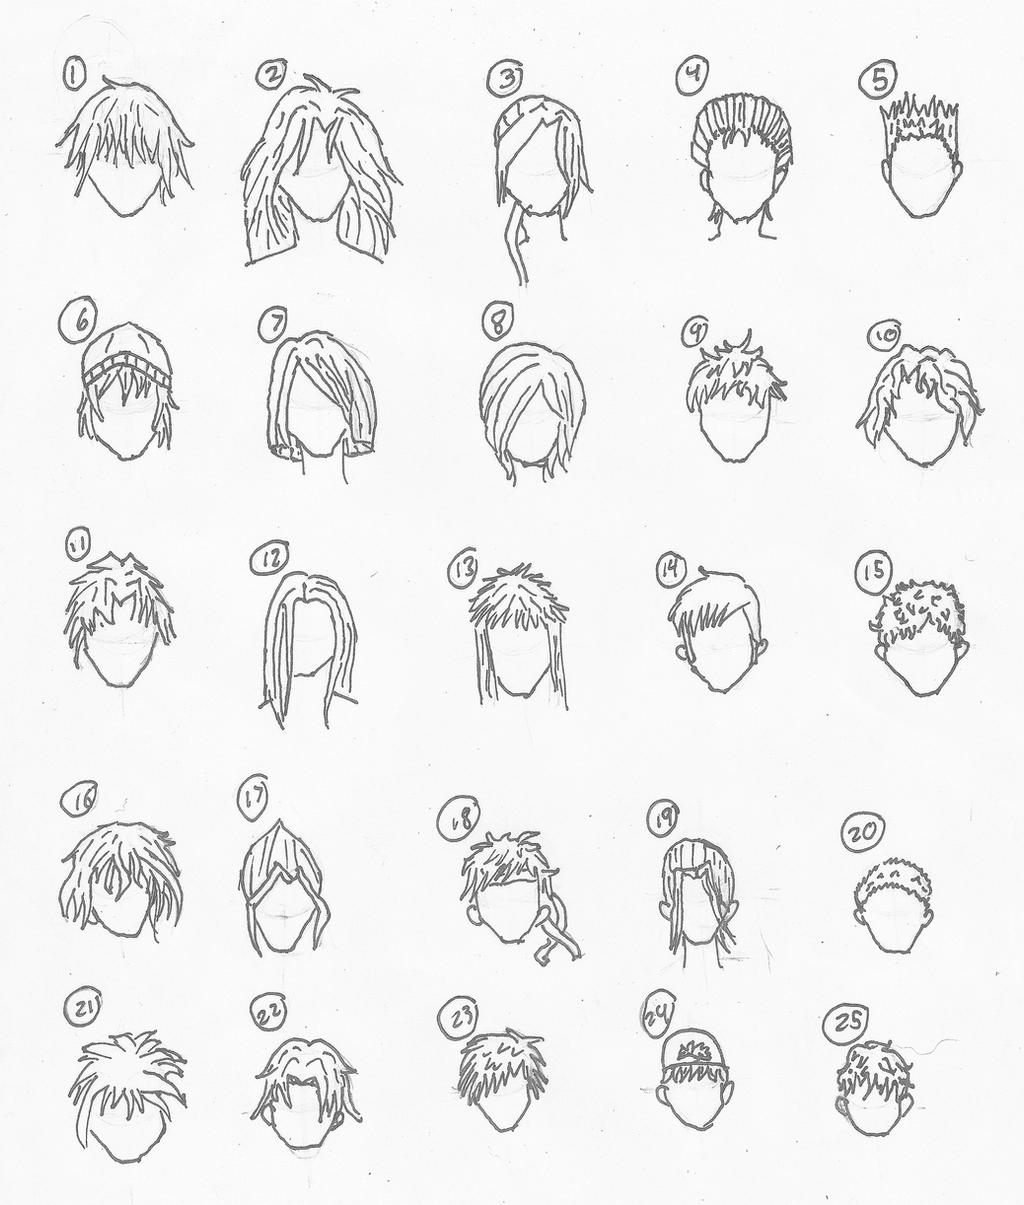 male anime/cartoon hairstyles by nagi126 on DeviantArt